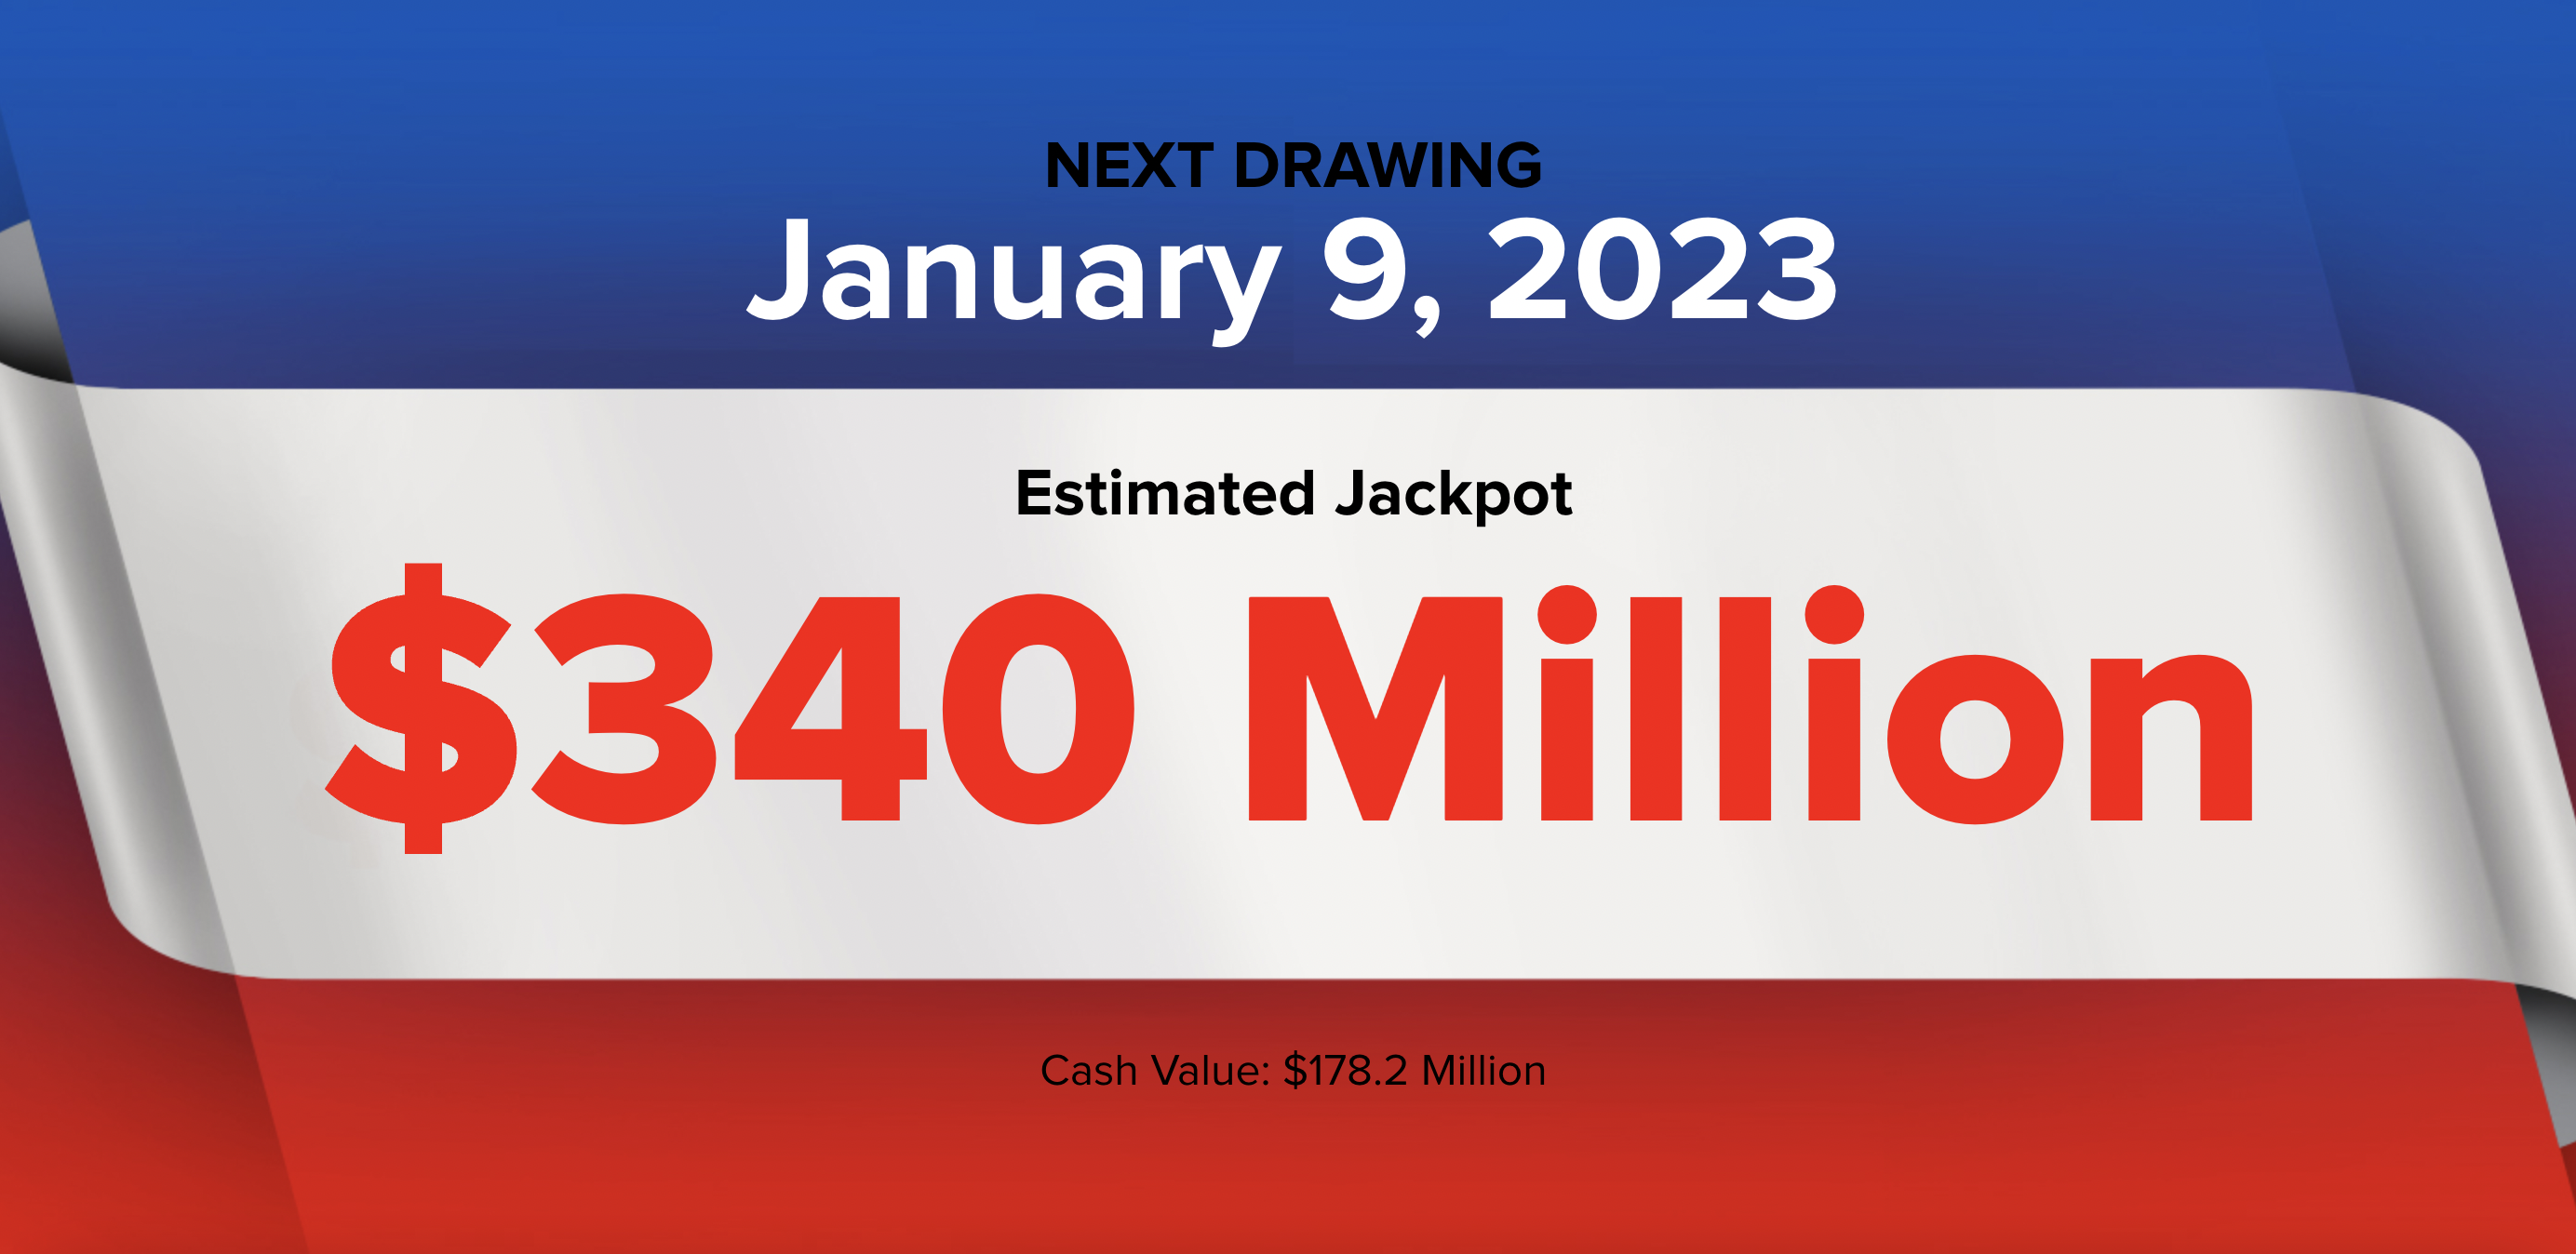 Winning Powerball numbers $1.565 billion jackpot October 9, 2023